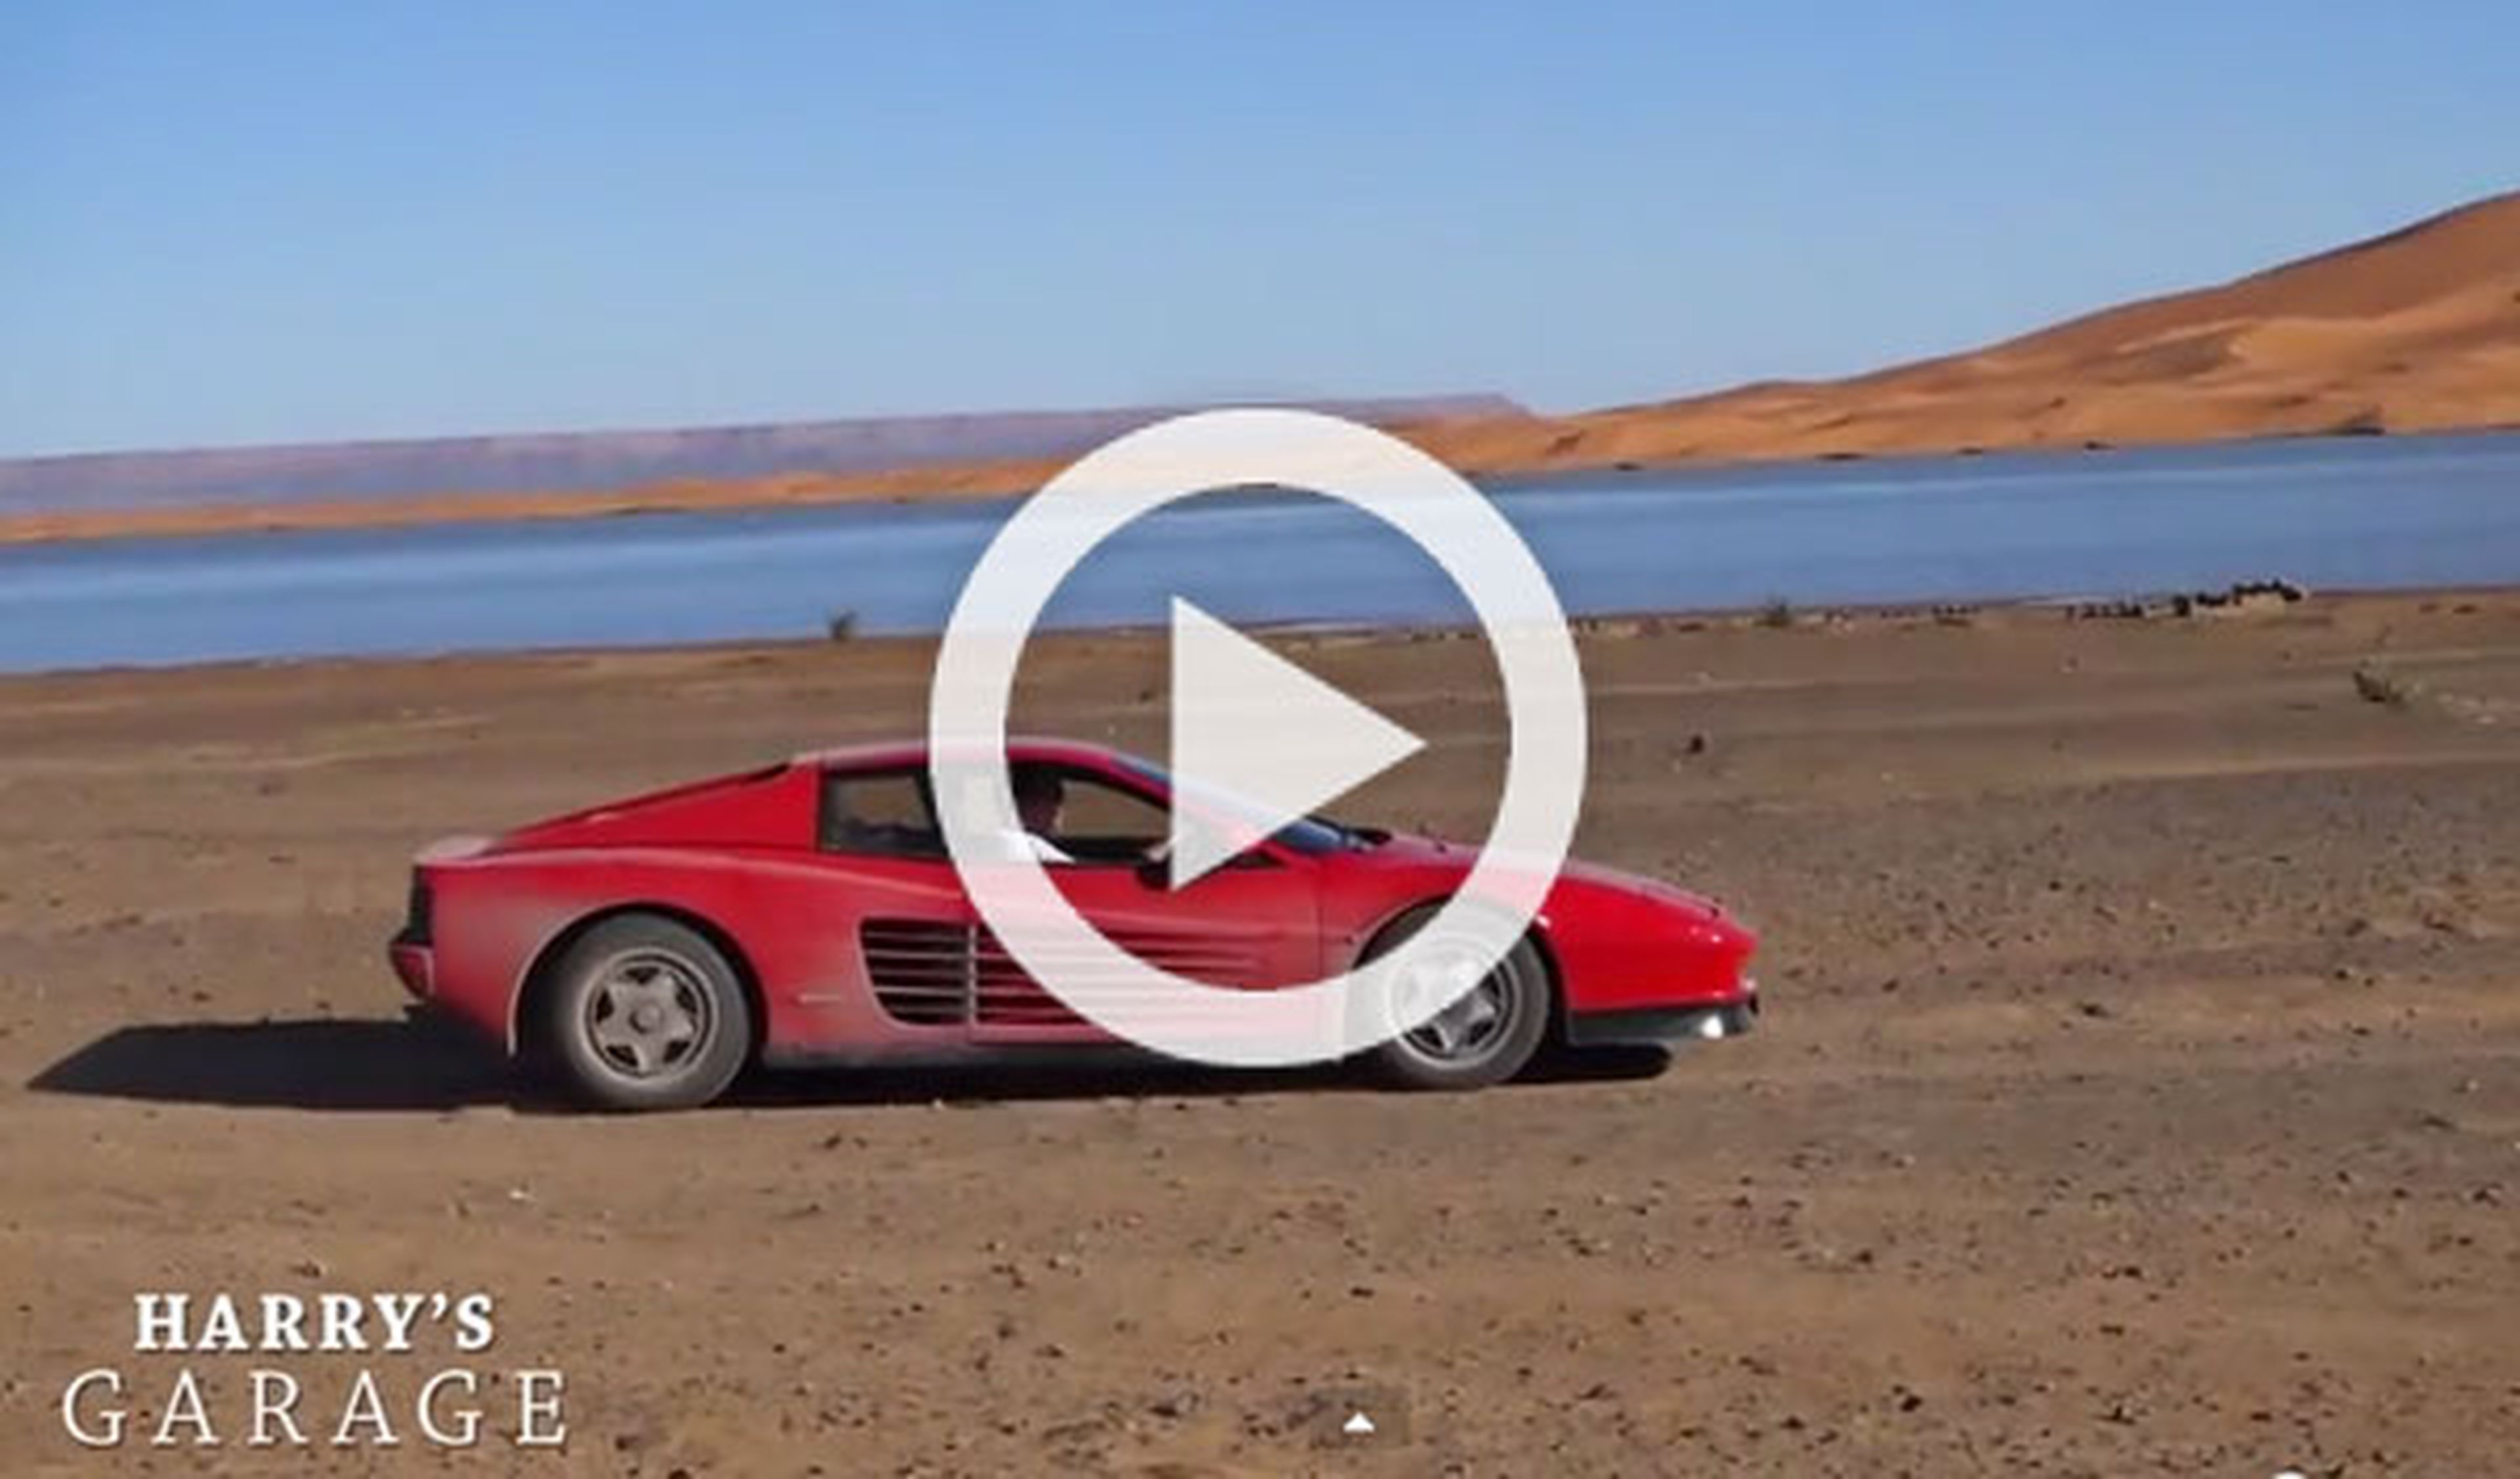 Por el desierto del Sahara con un Ferrari Testarossa